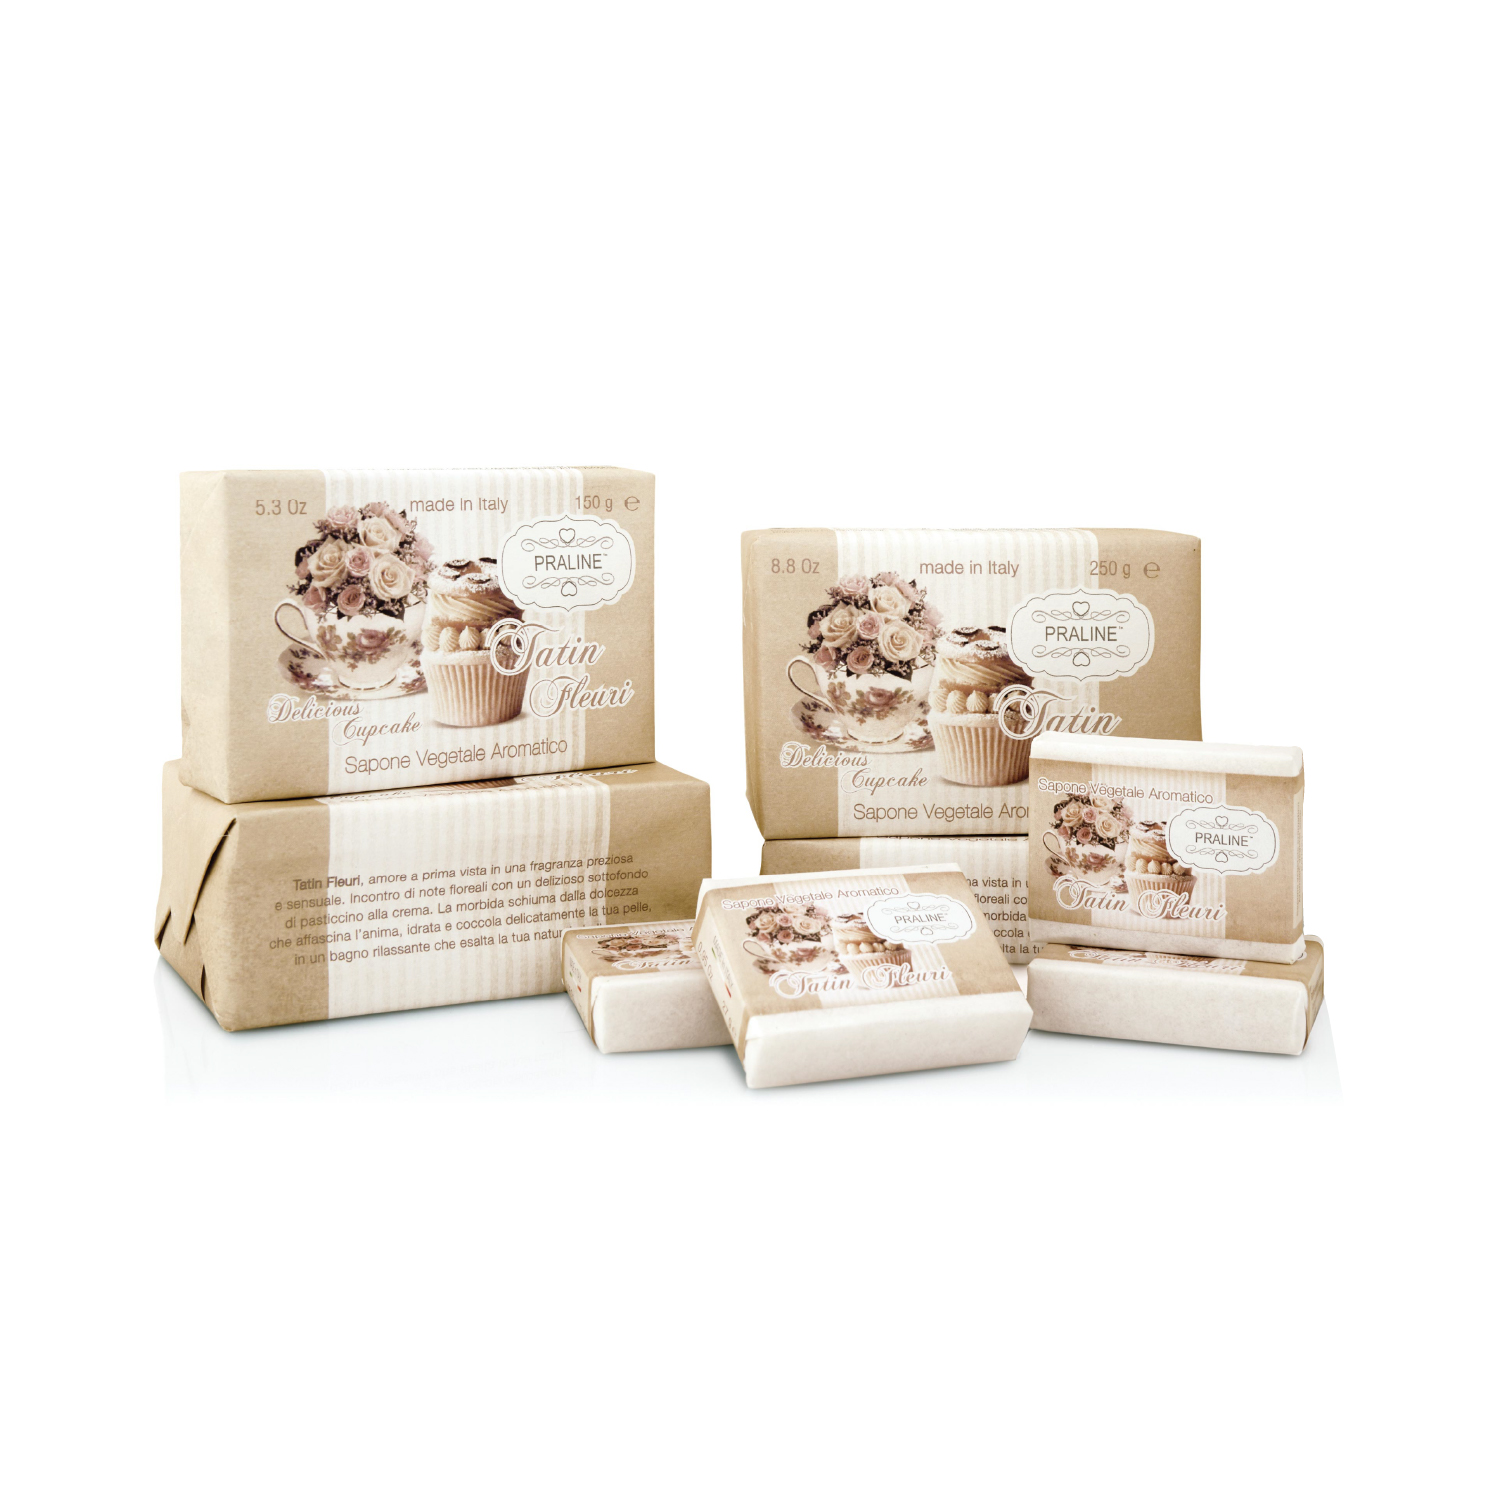 Vegetal Aromatic Soap – Solid Tatin Fleuri